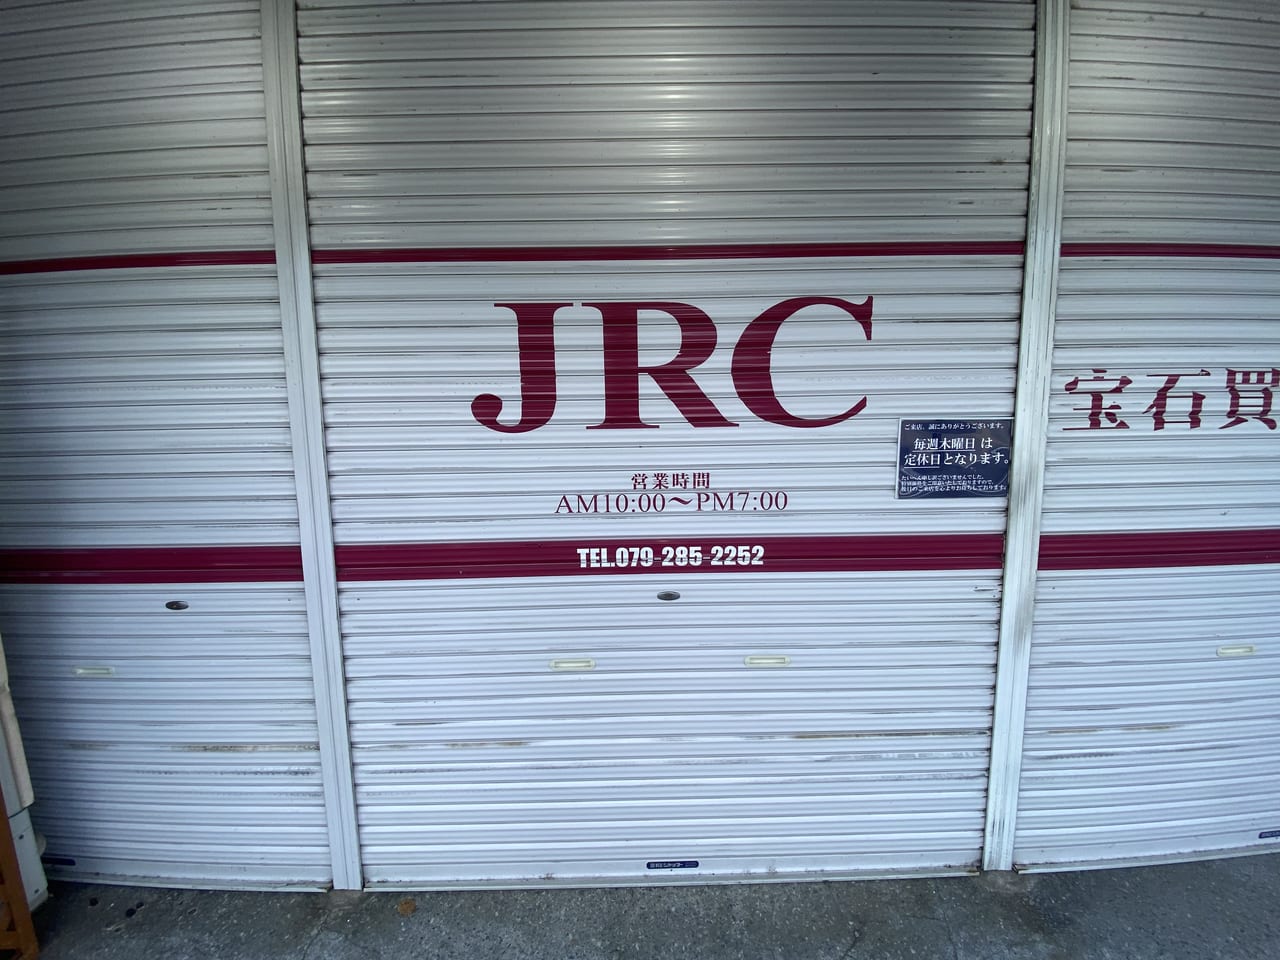 JRC 姫路本店